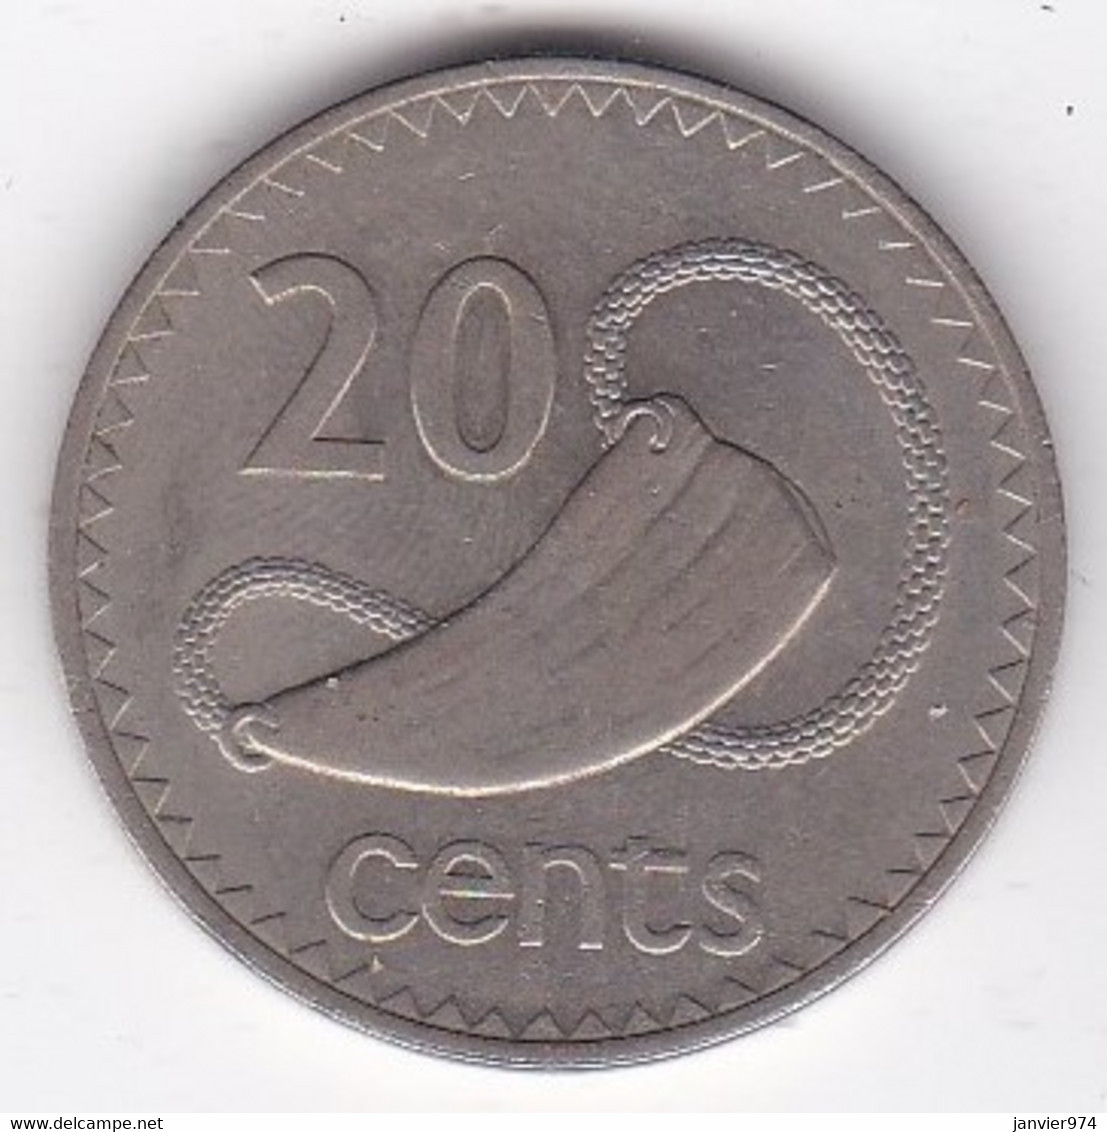 Fidji 20 Cents 1977 Elizabeth II, Cupronickel, KM# 31 - Fidji